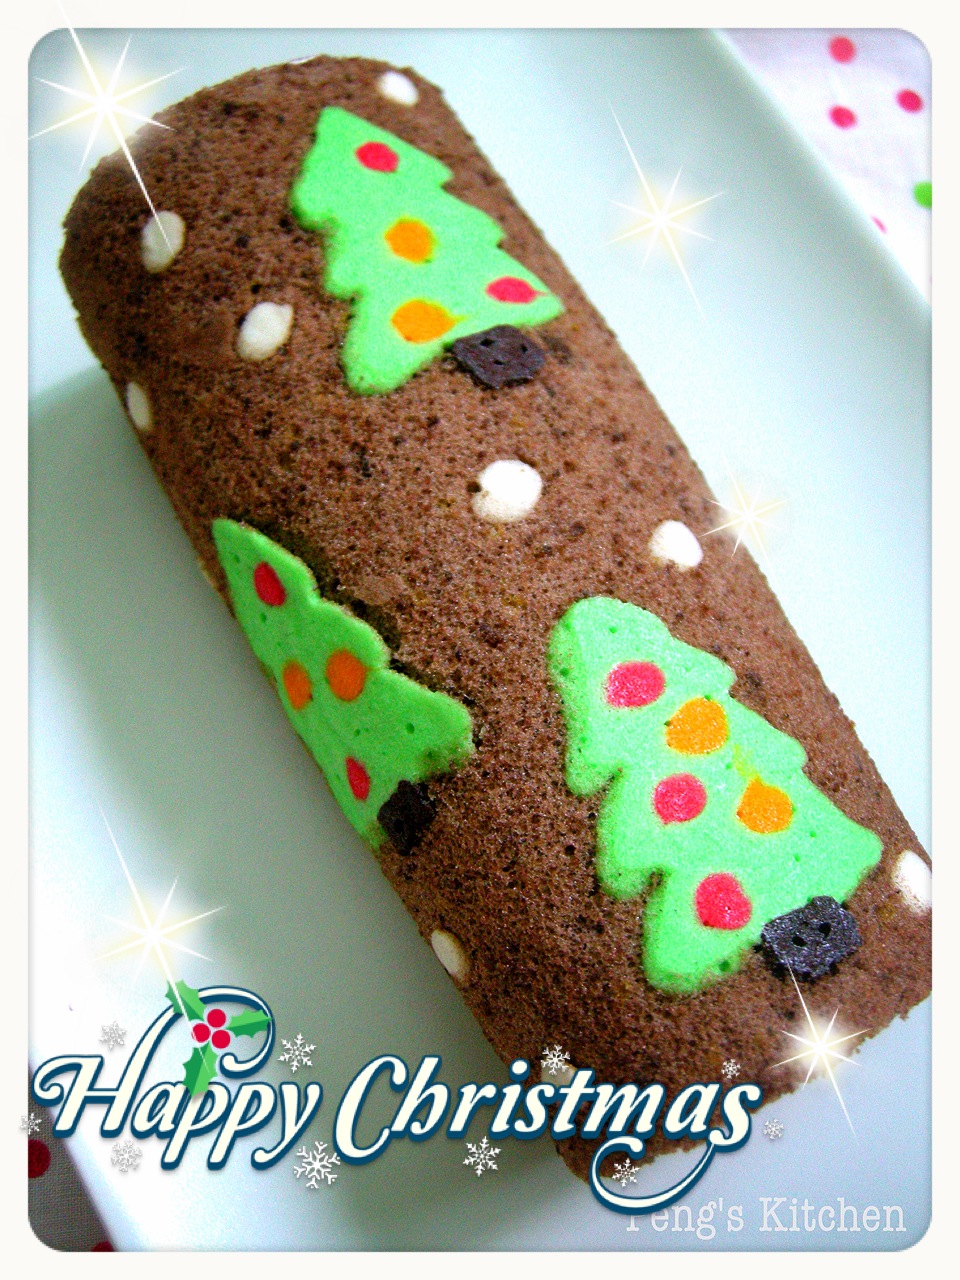 Peng's Kitchen: Christmas Cake Roll